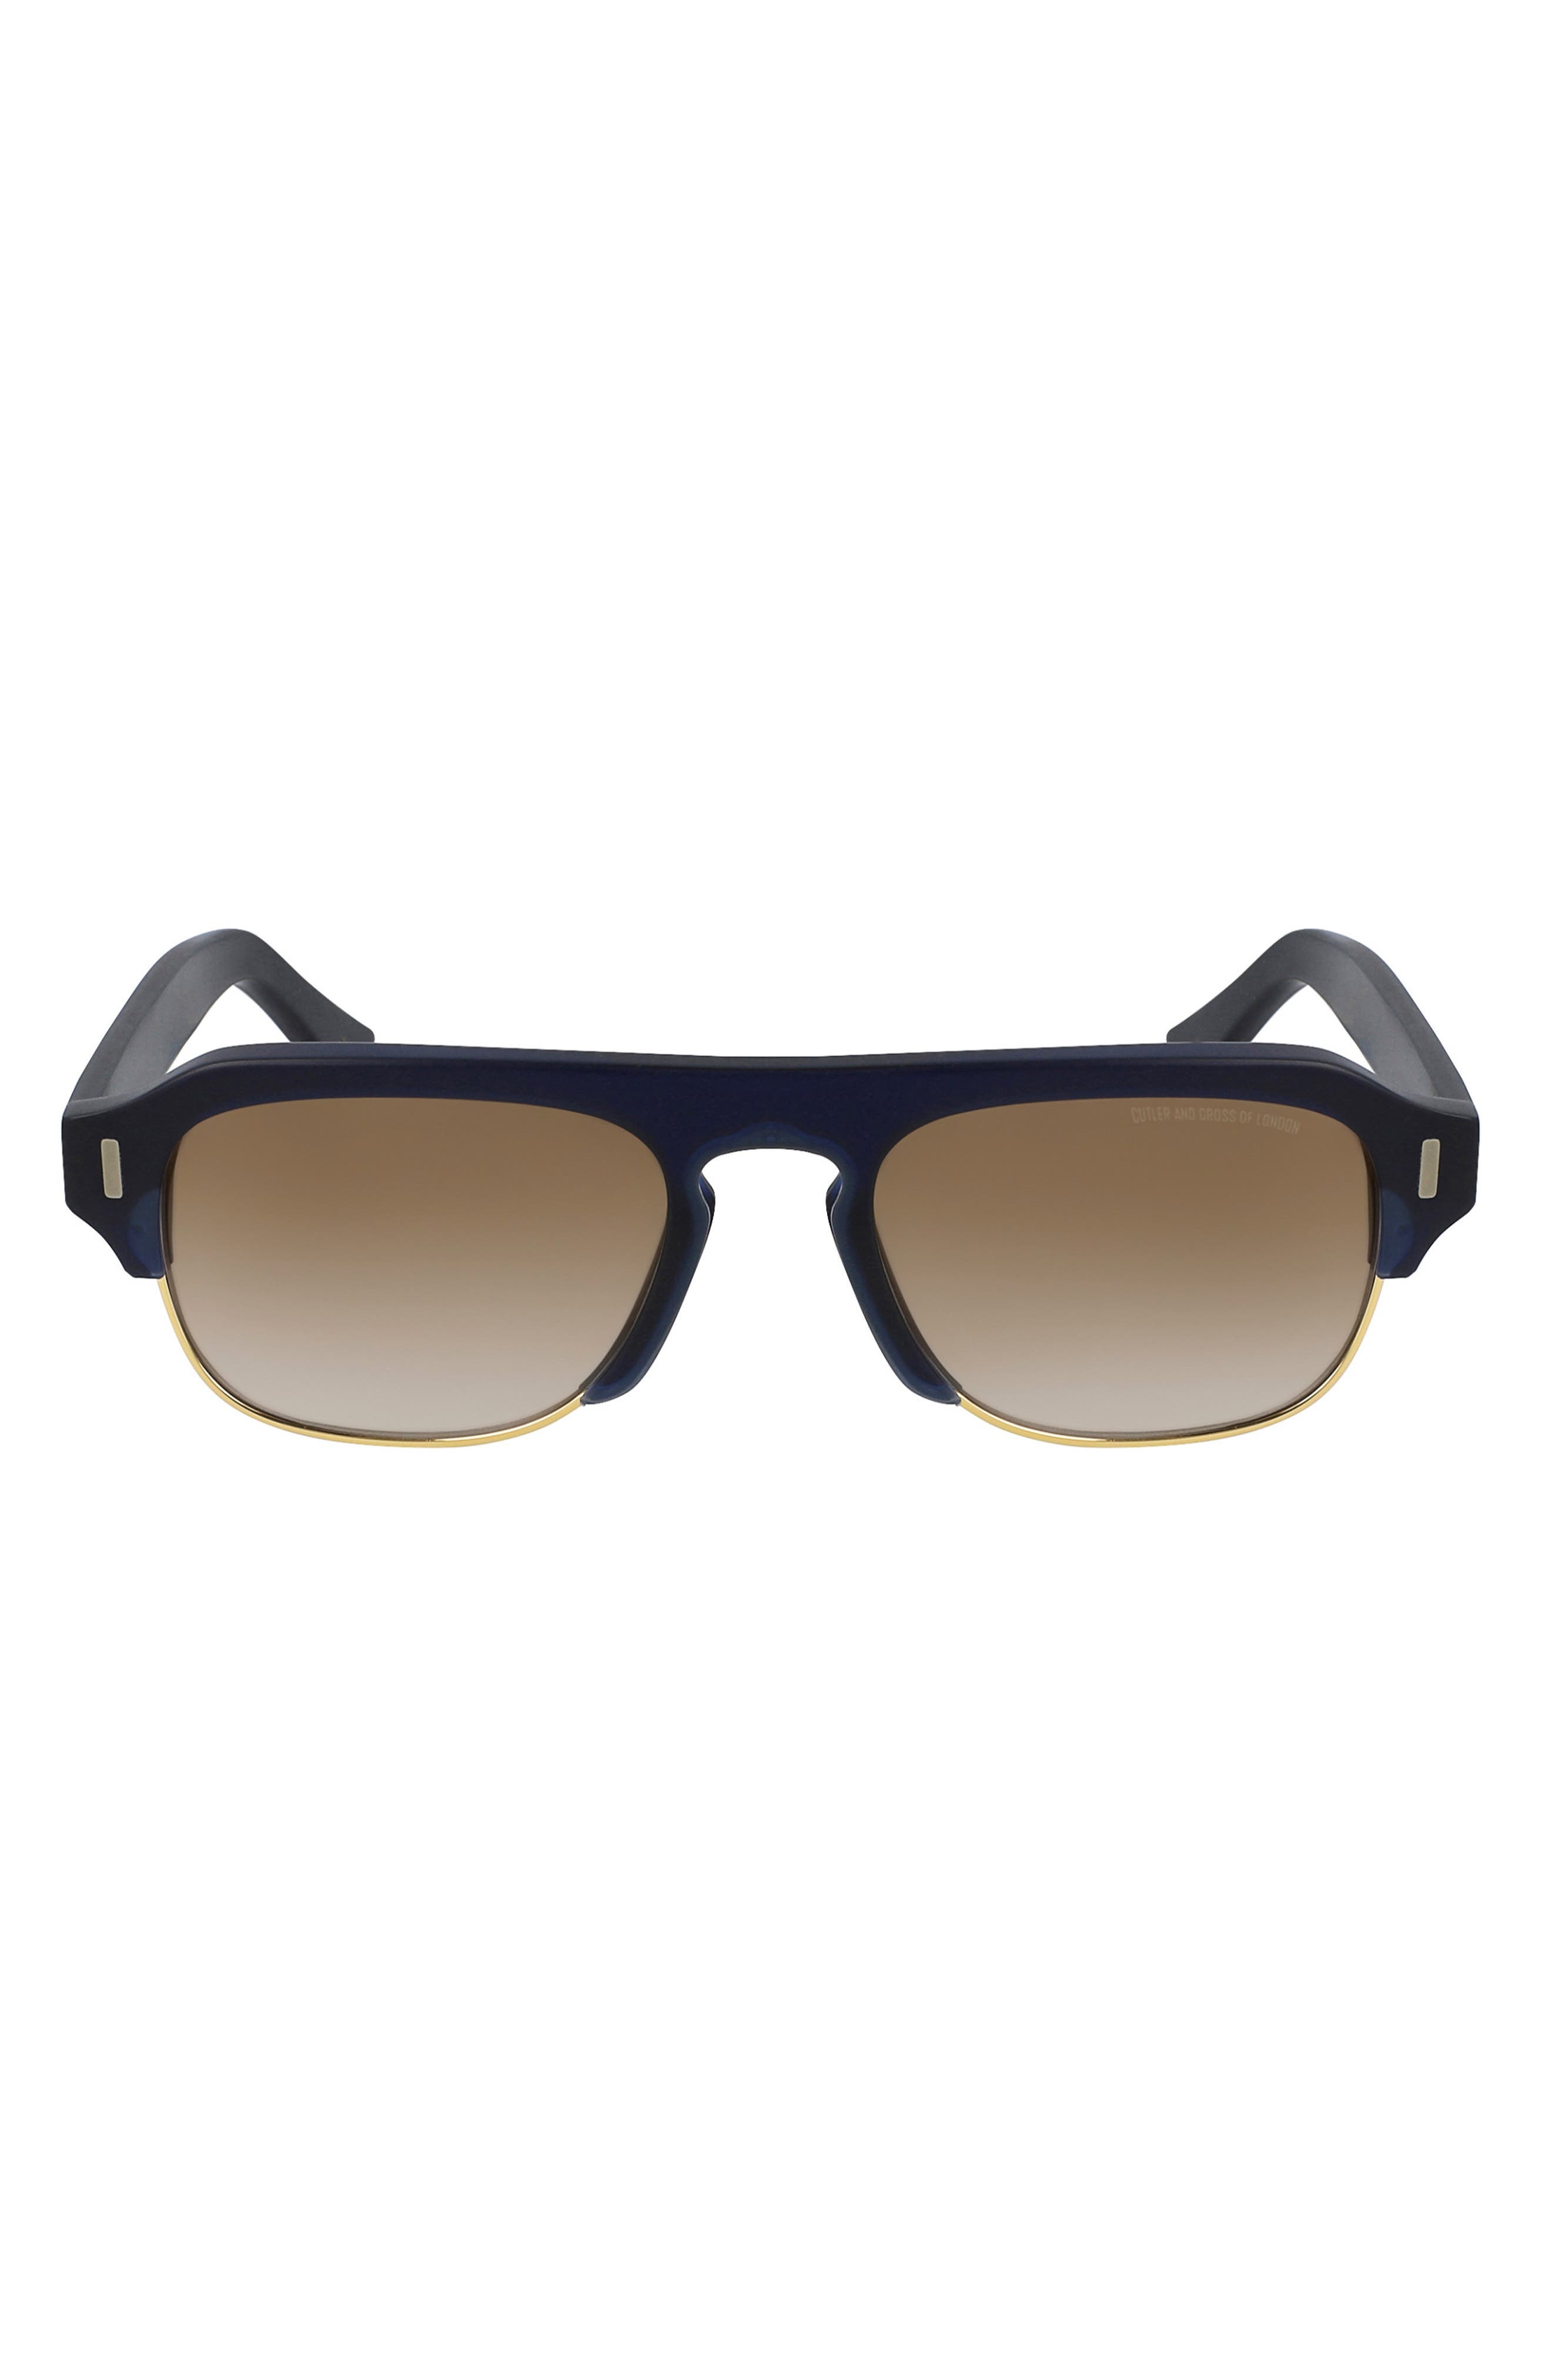 56mm Flat Top Sunglasses in Navy Blue/Gradient - 1